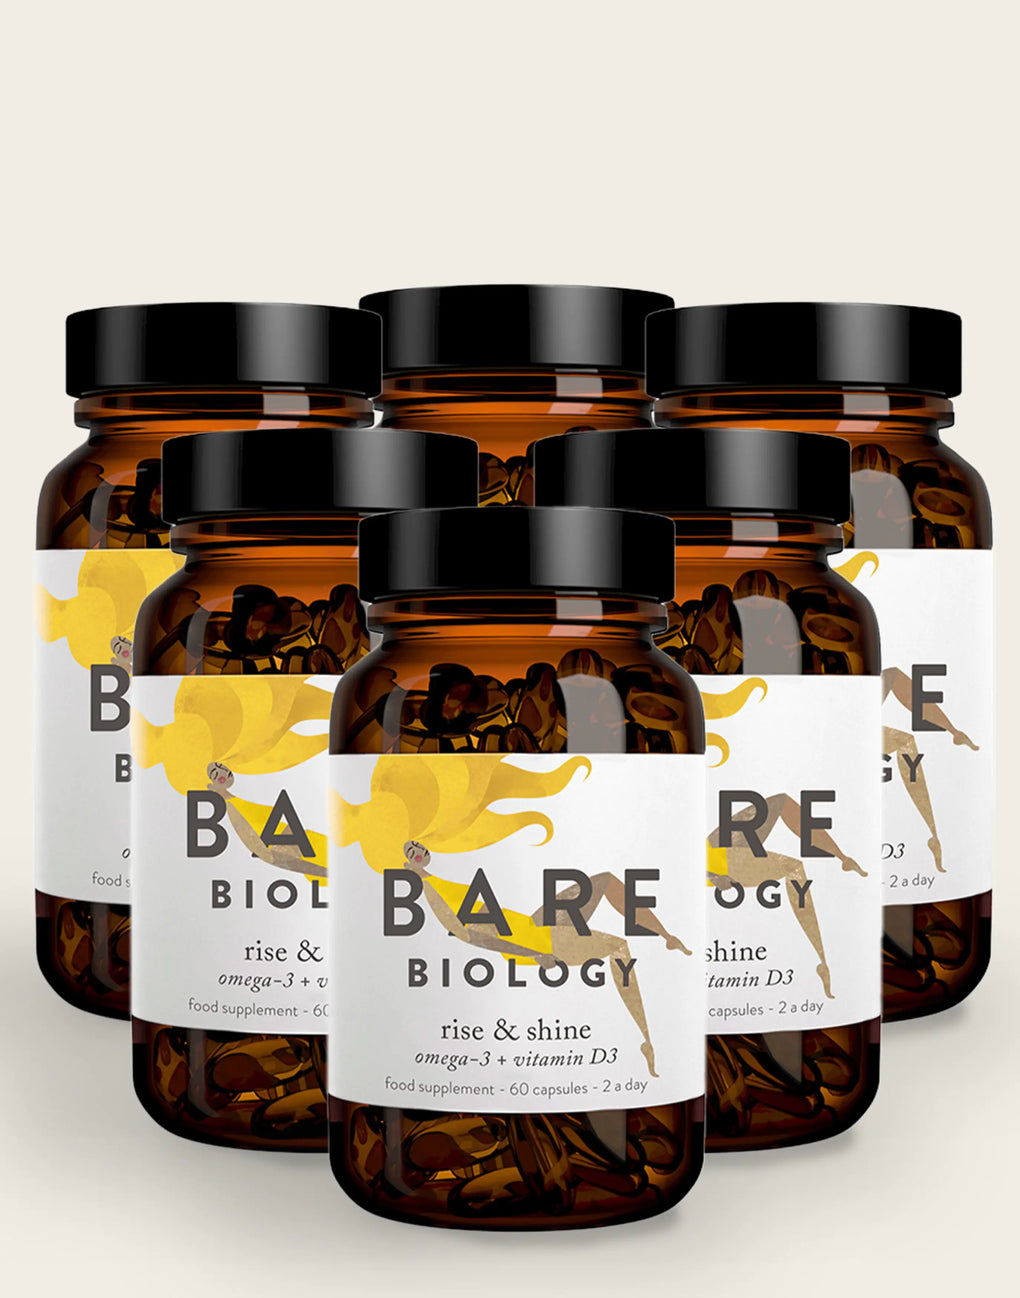 bare biology rise & shine omega 3 fish oil and vitamin d3 supplement bottles shot on white background